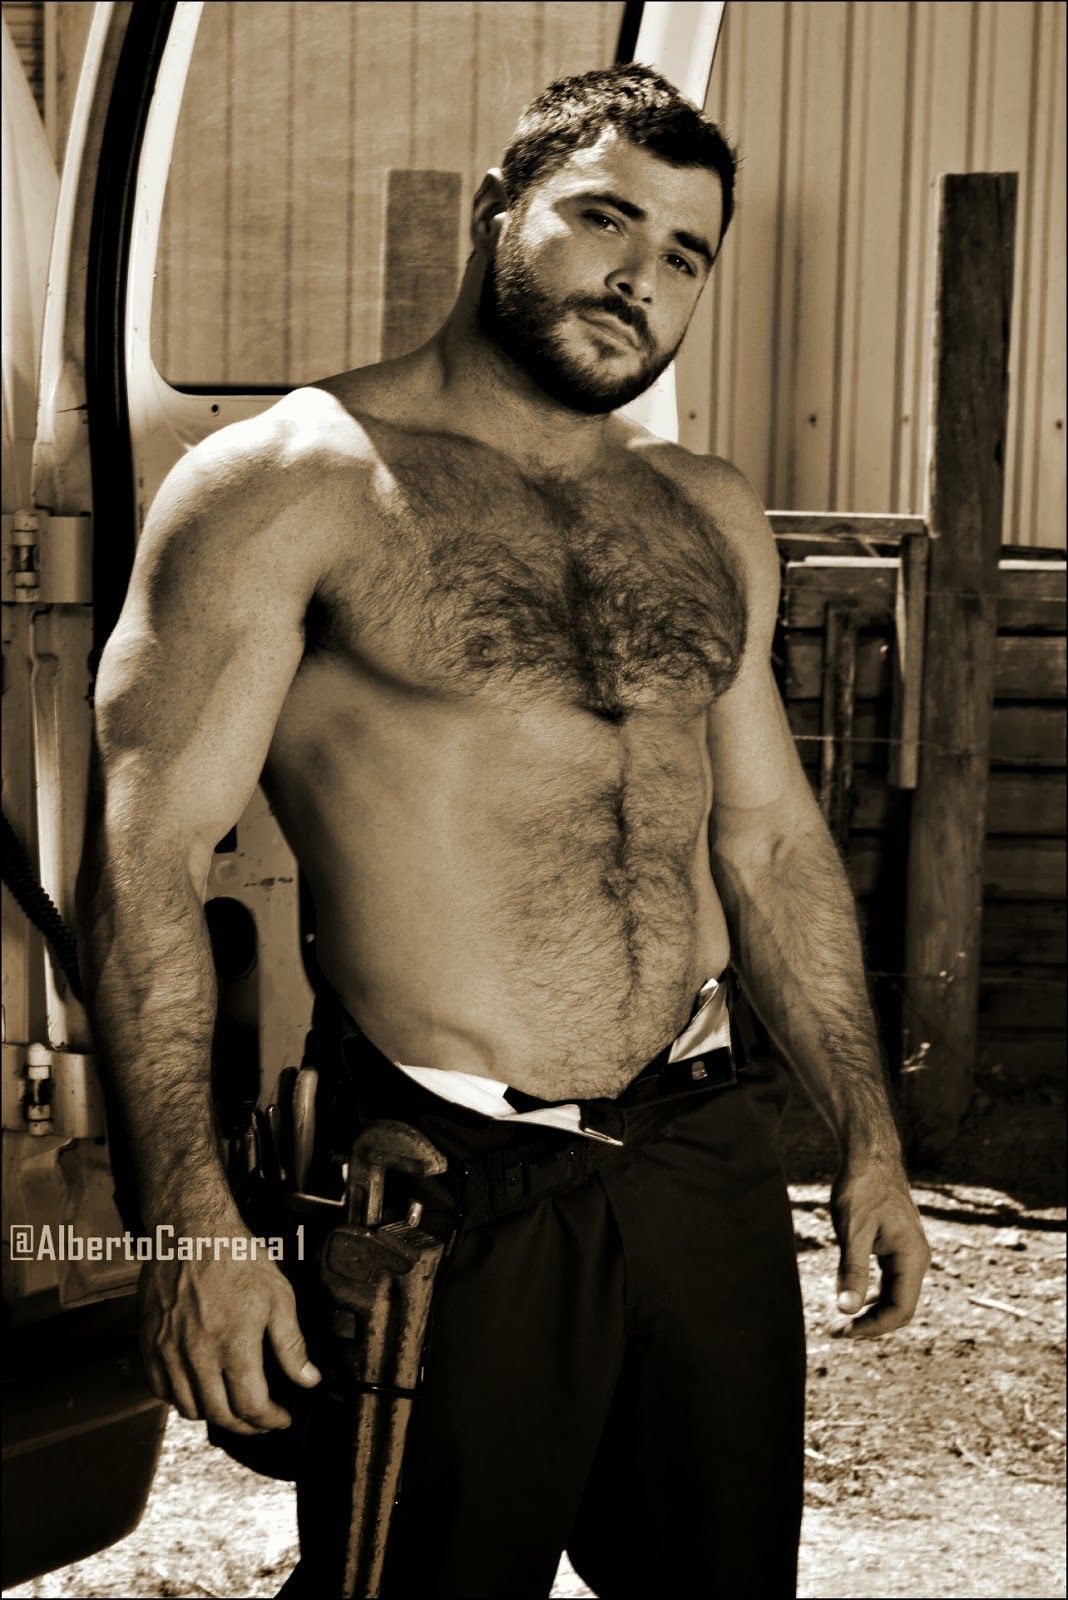 Best Gay Stuff Images On Pinterest Hairy Men Hot Men And Bears